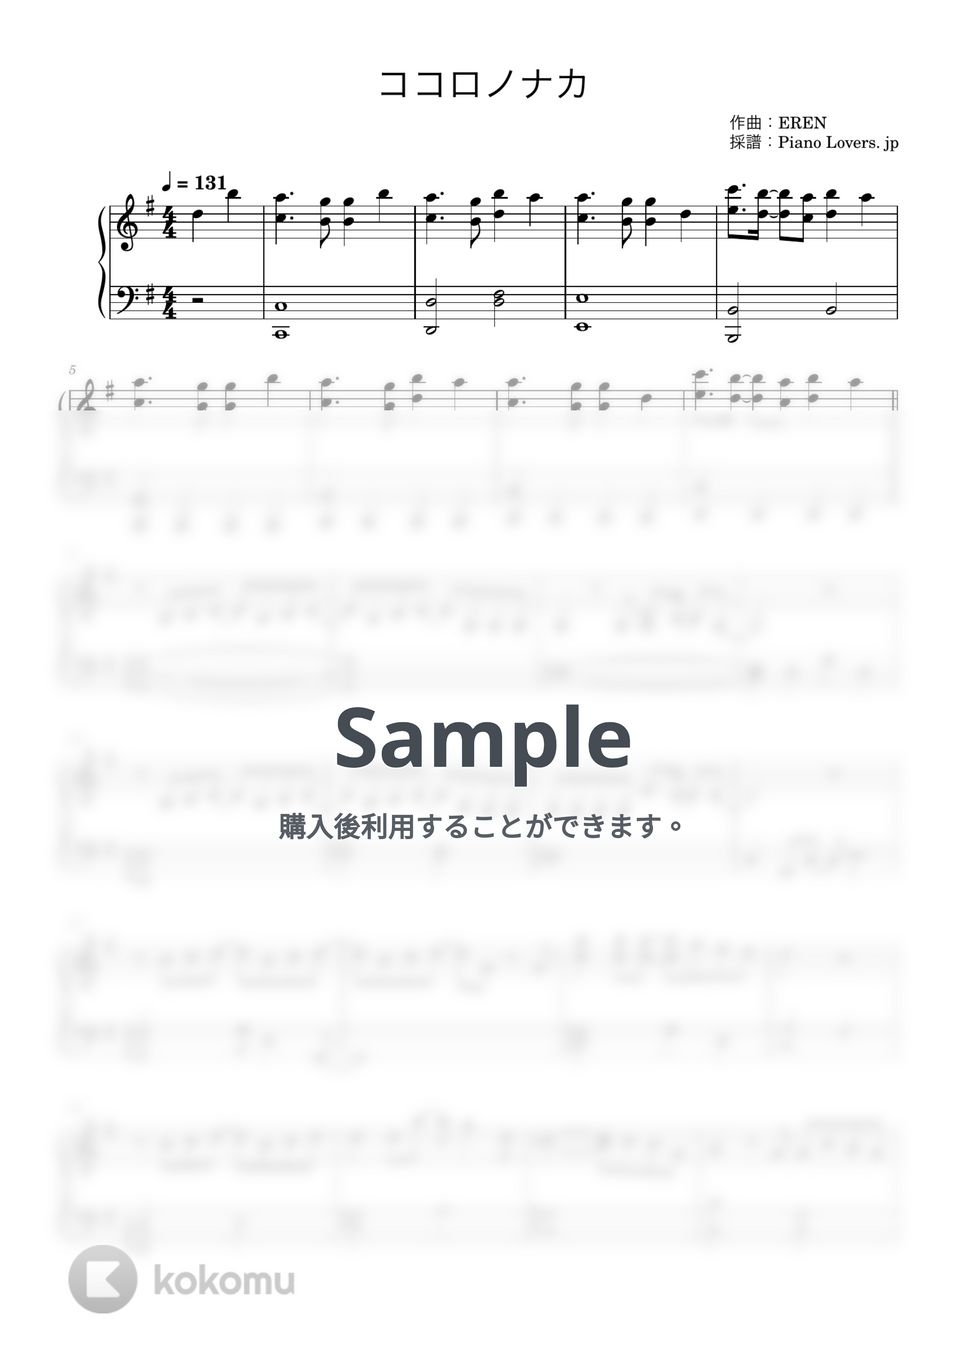 AliA - ココロノナカ (結婚指輪物語) by Piano Lovers. jp